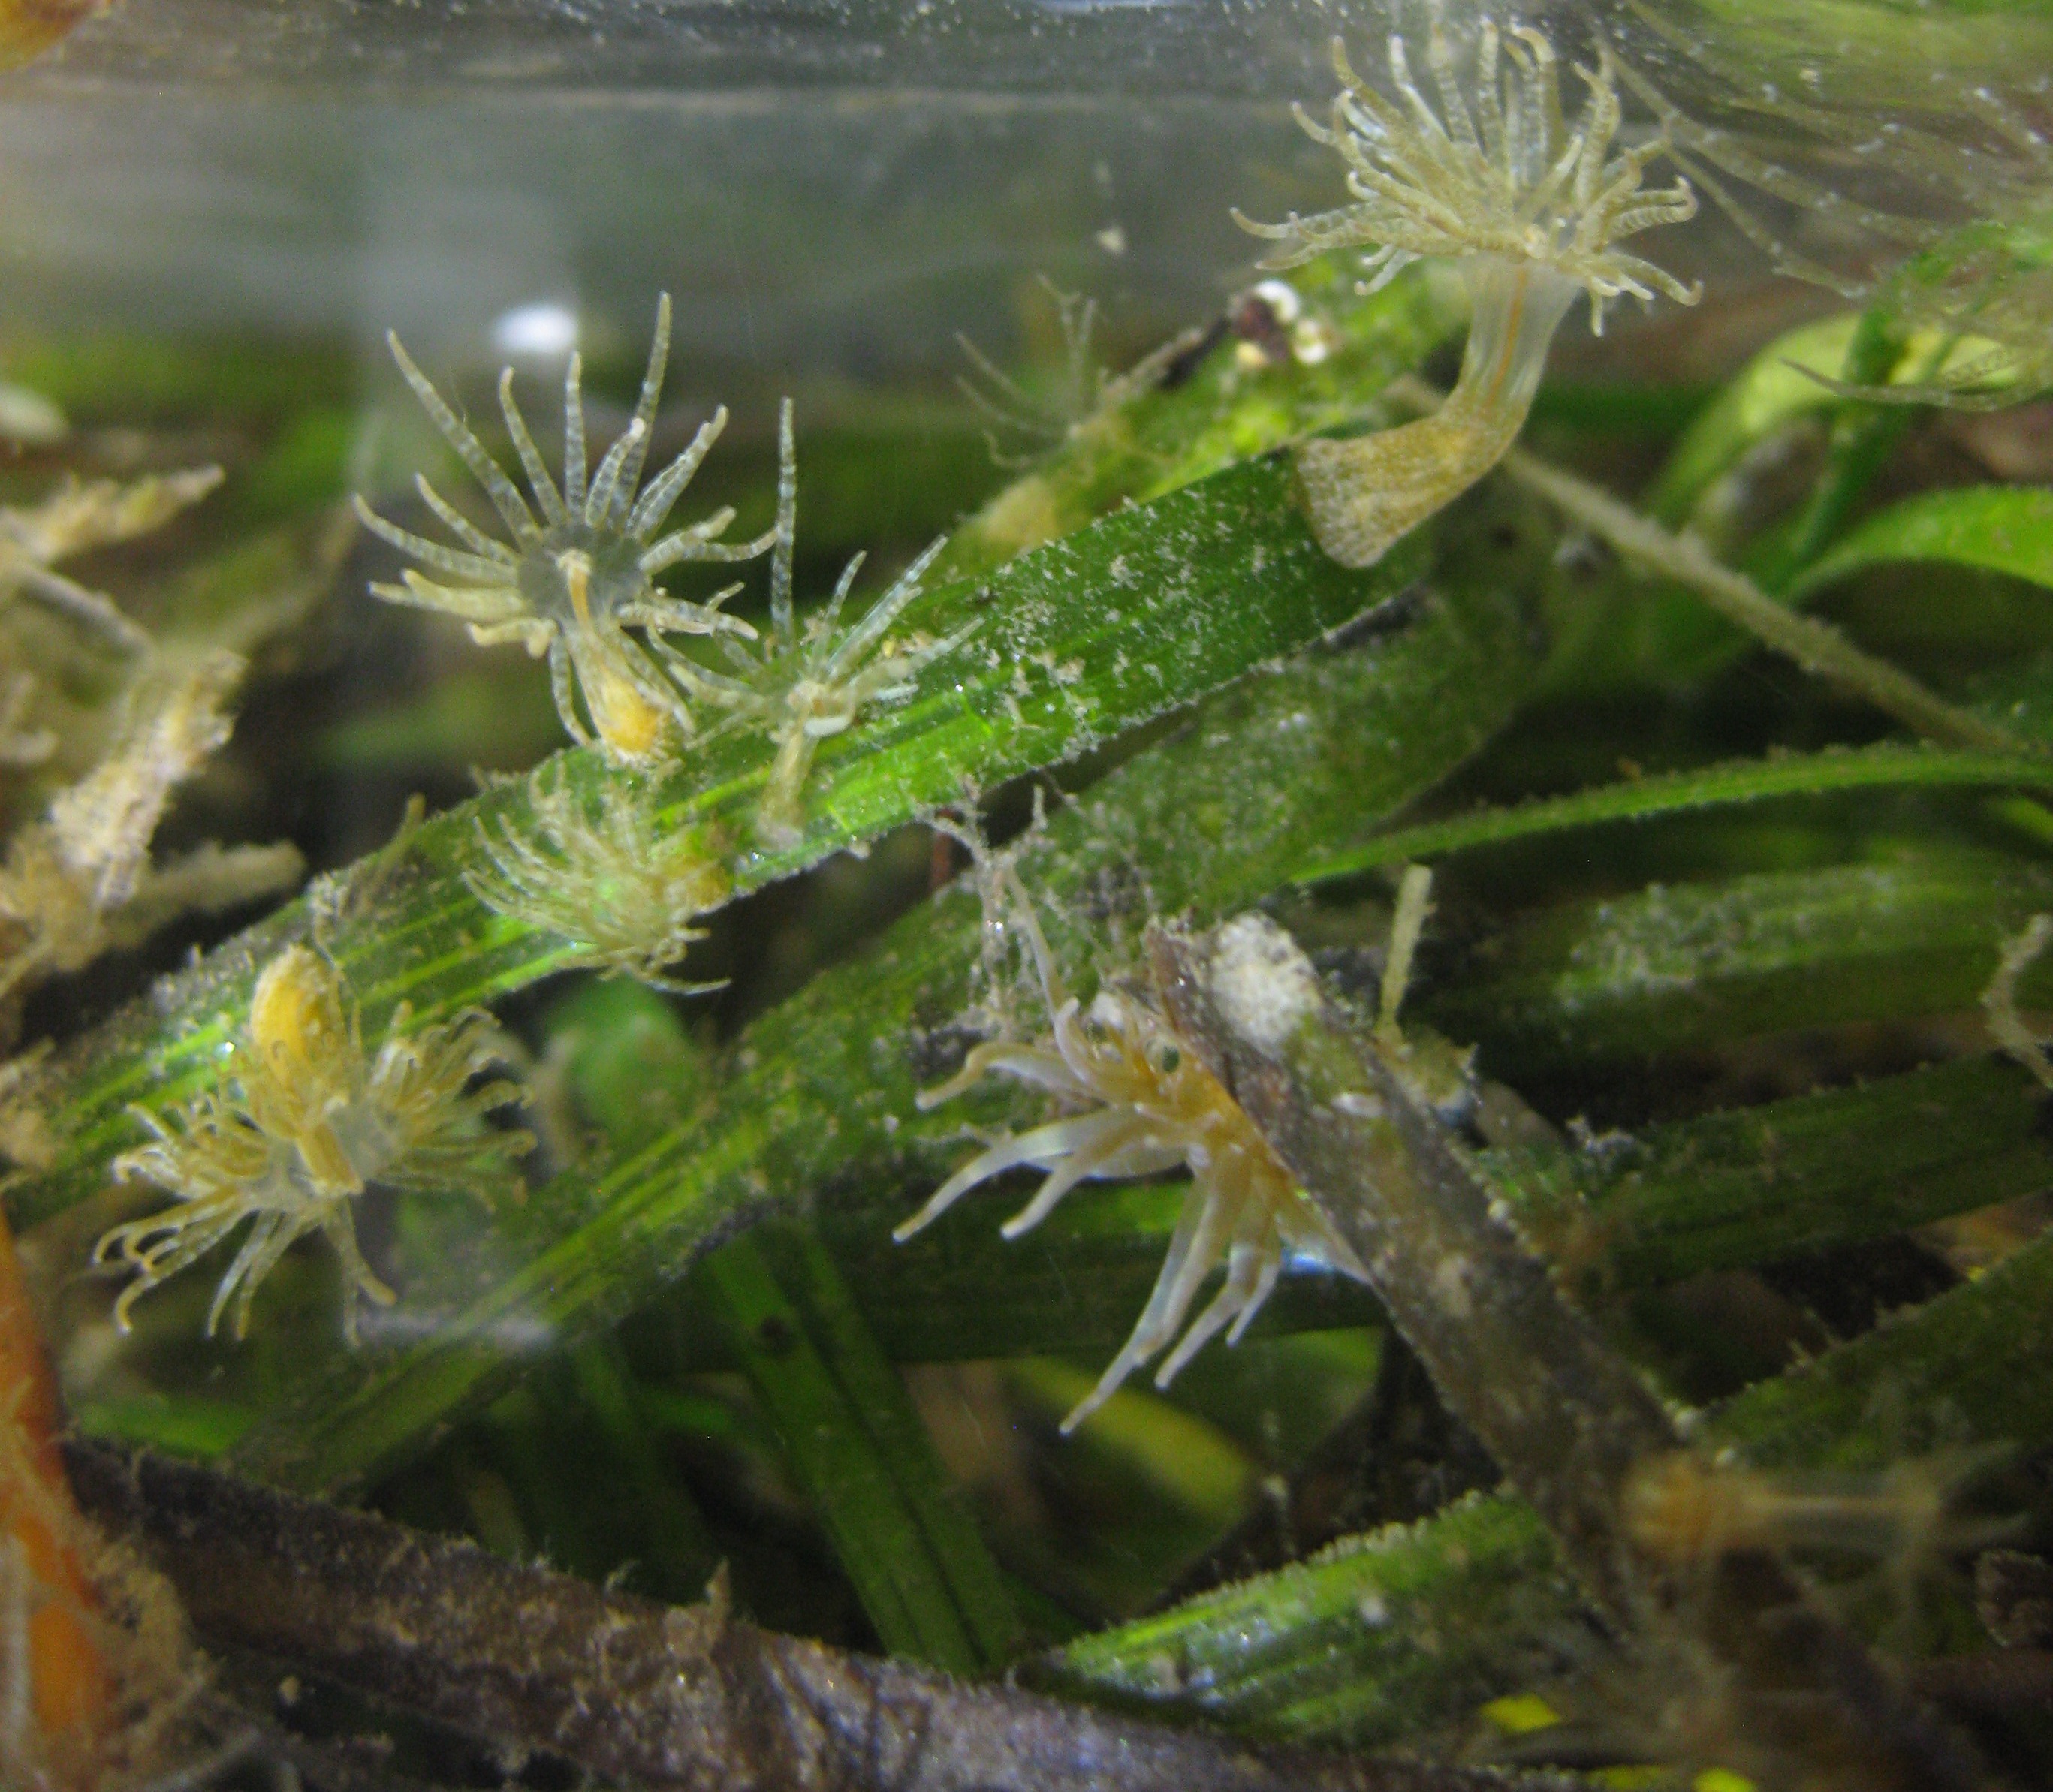 Eelgrass blades colonized by anemones